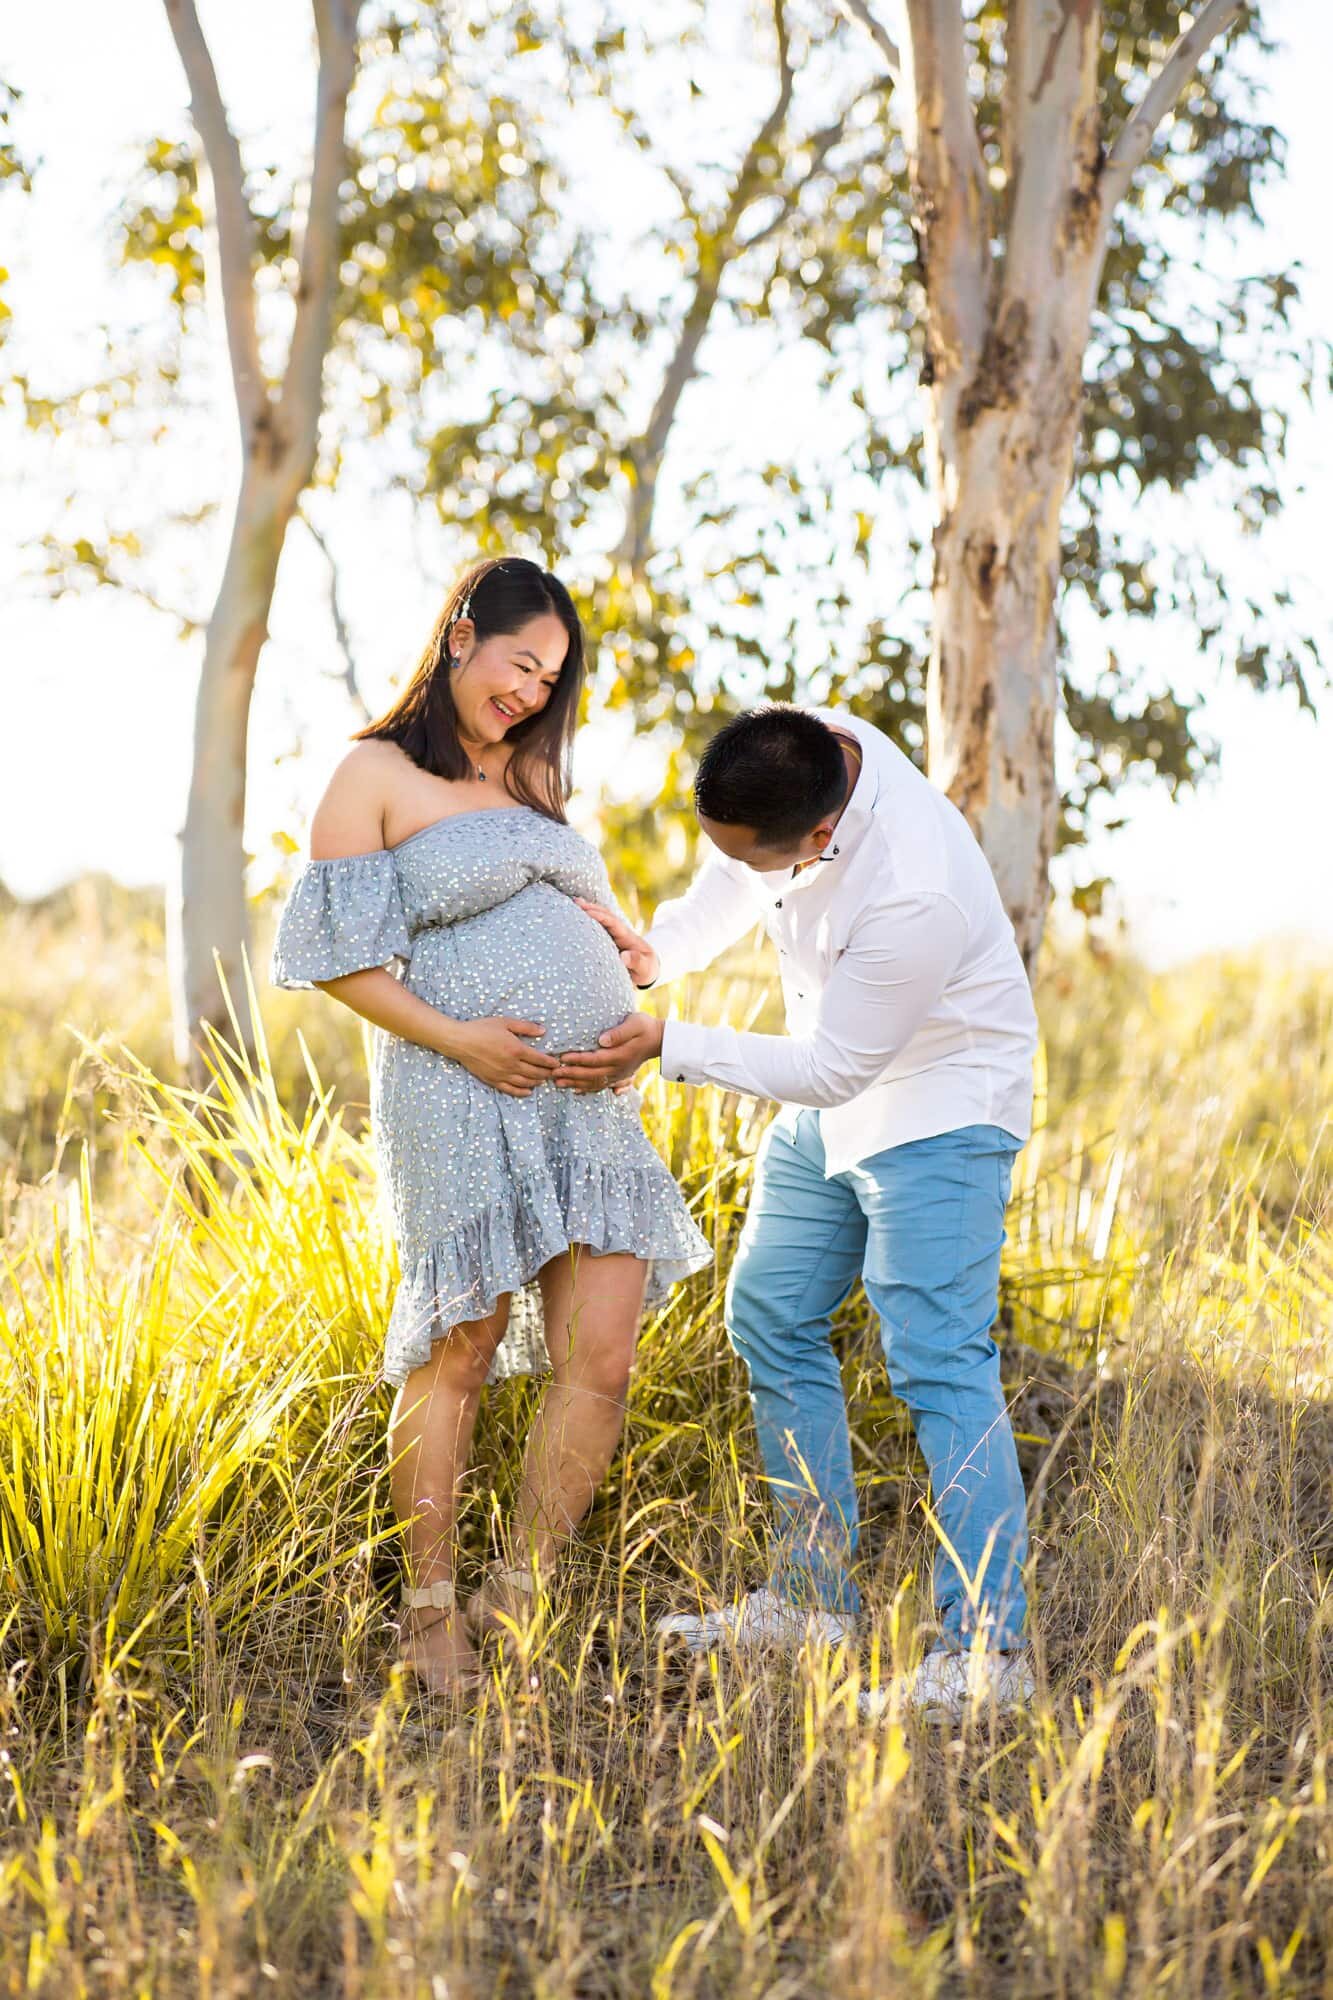 Sydney-maternity-photoshoot-outdoors-Woo-La-Rah-(16).jpg